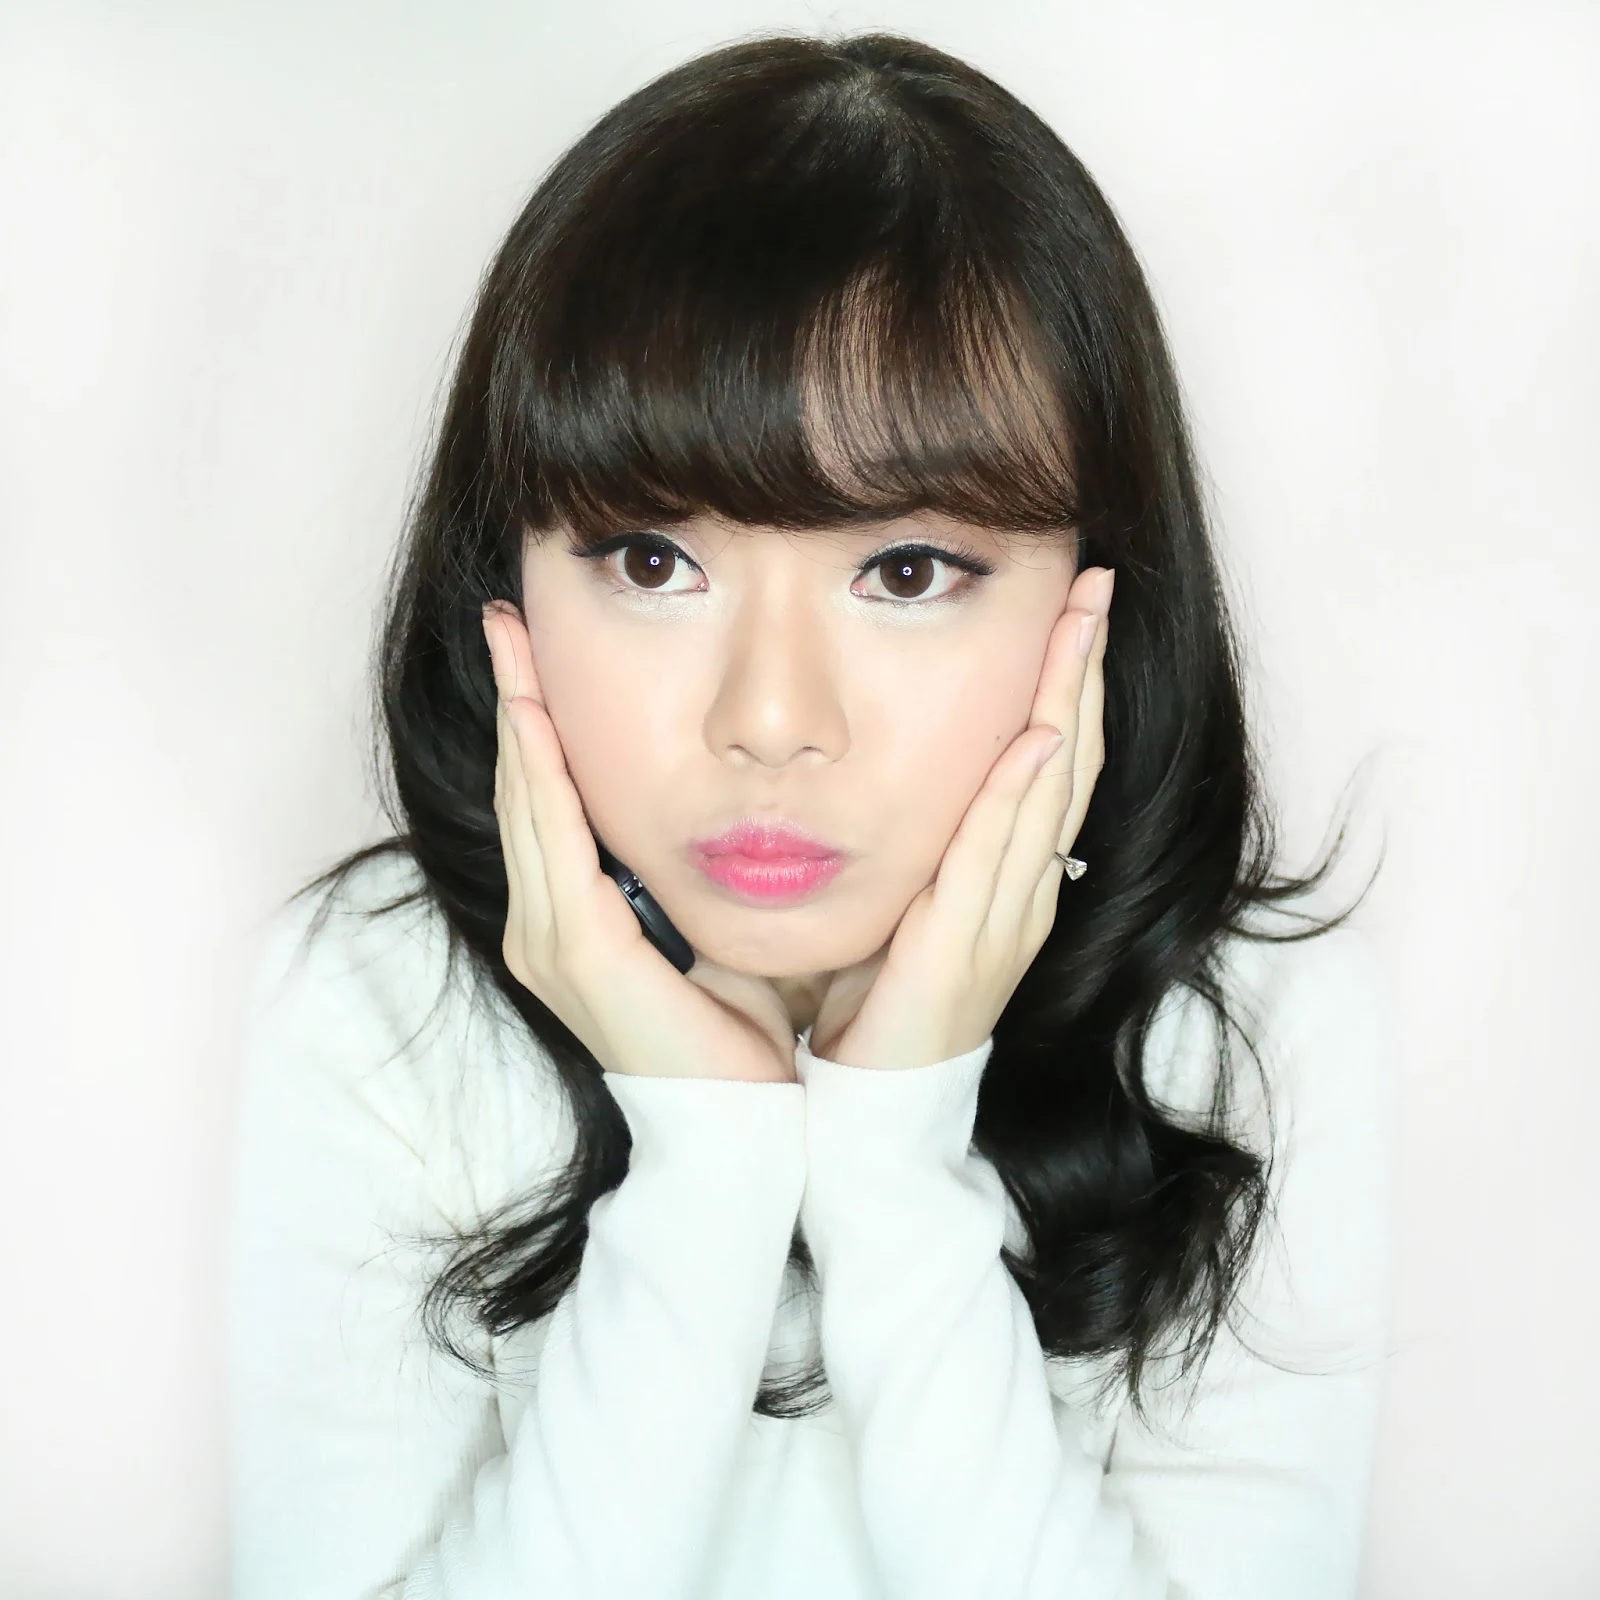 Twice Cheer Up Nayeon Makeup Tutorial Video Jean Milka